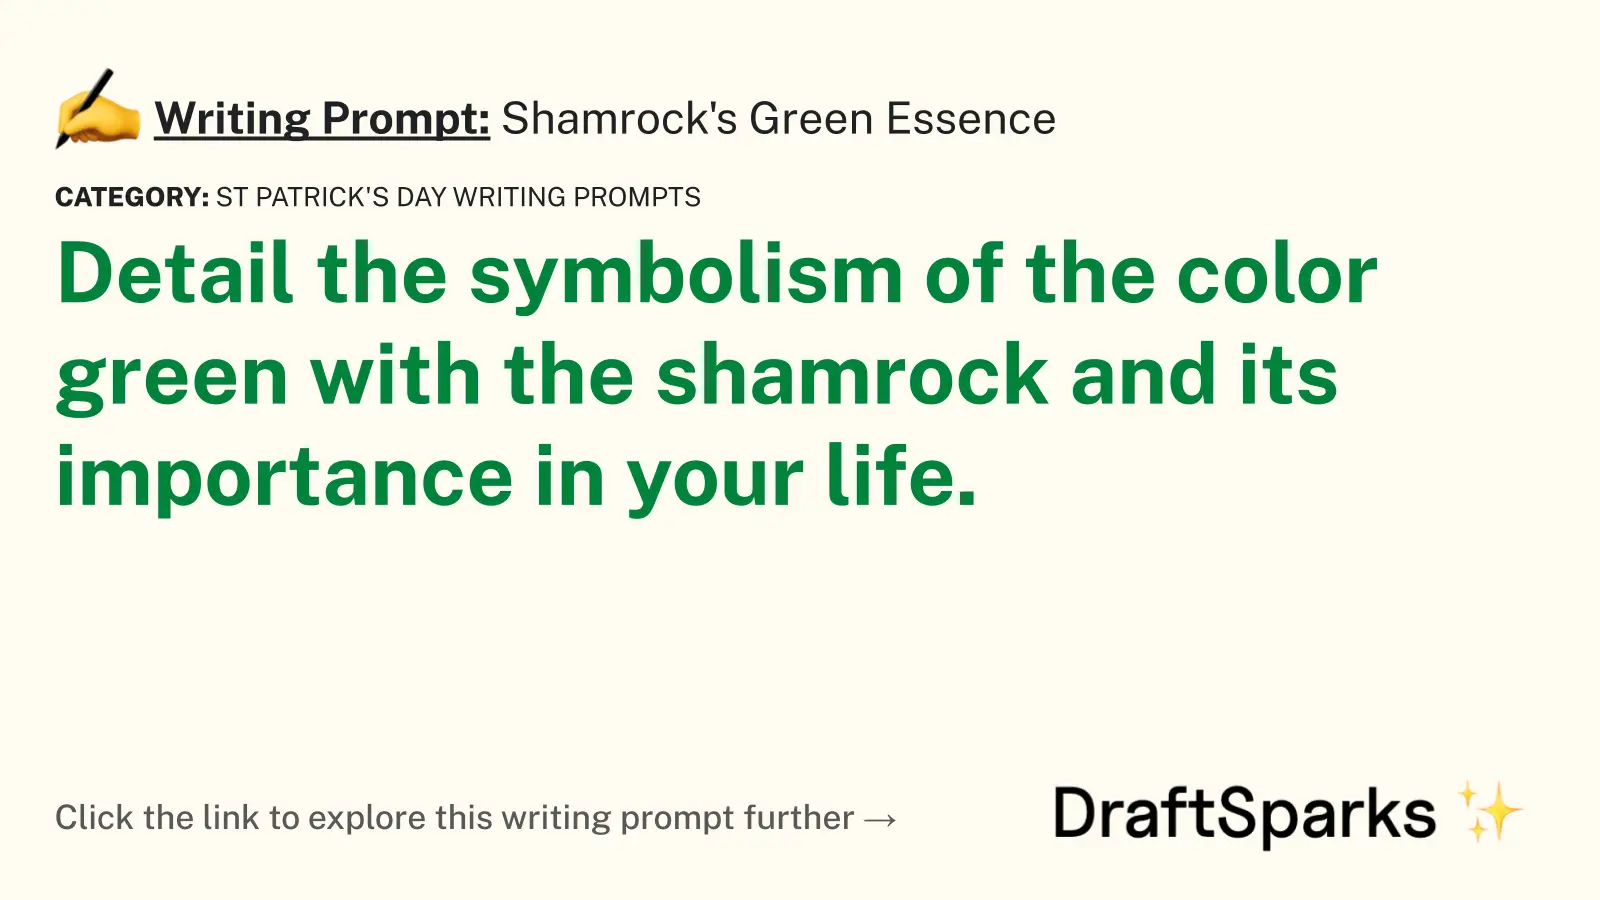 Shamrock’s Green Essence